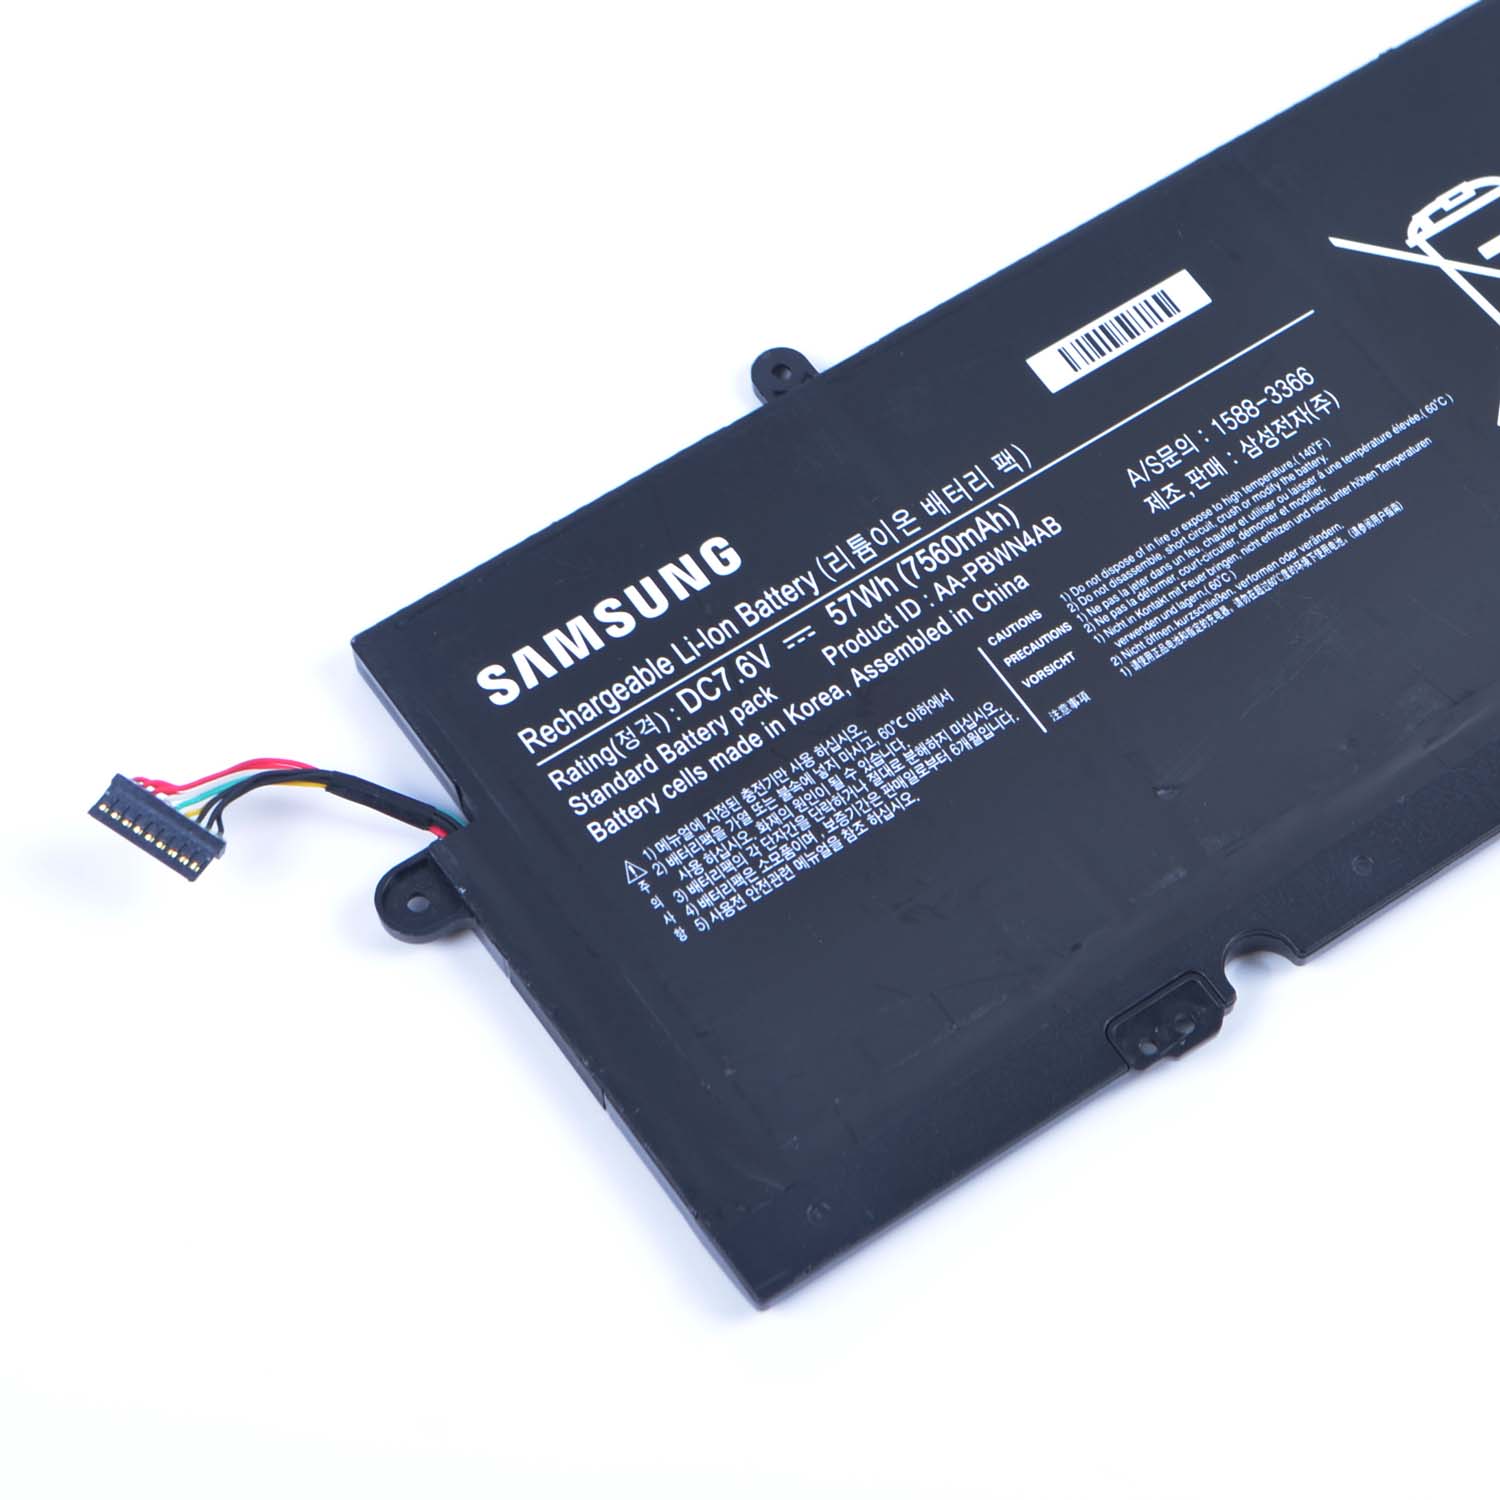 Samsung Samsung 740U3E-S01 battery